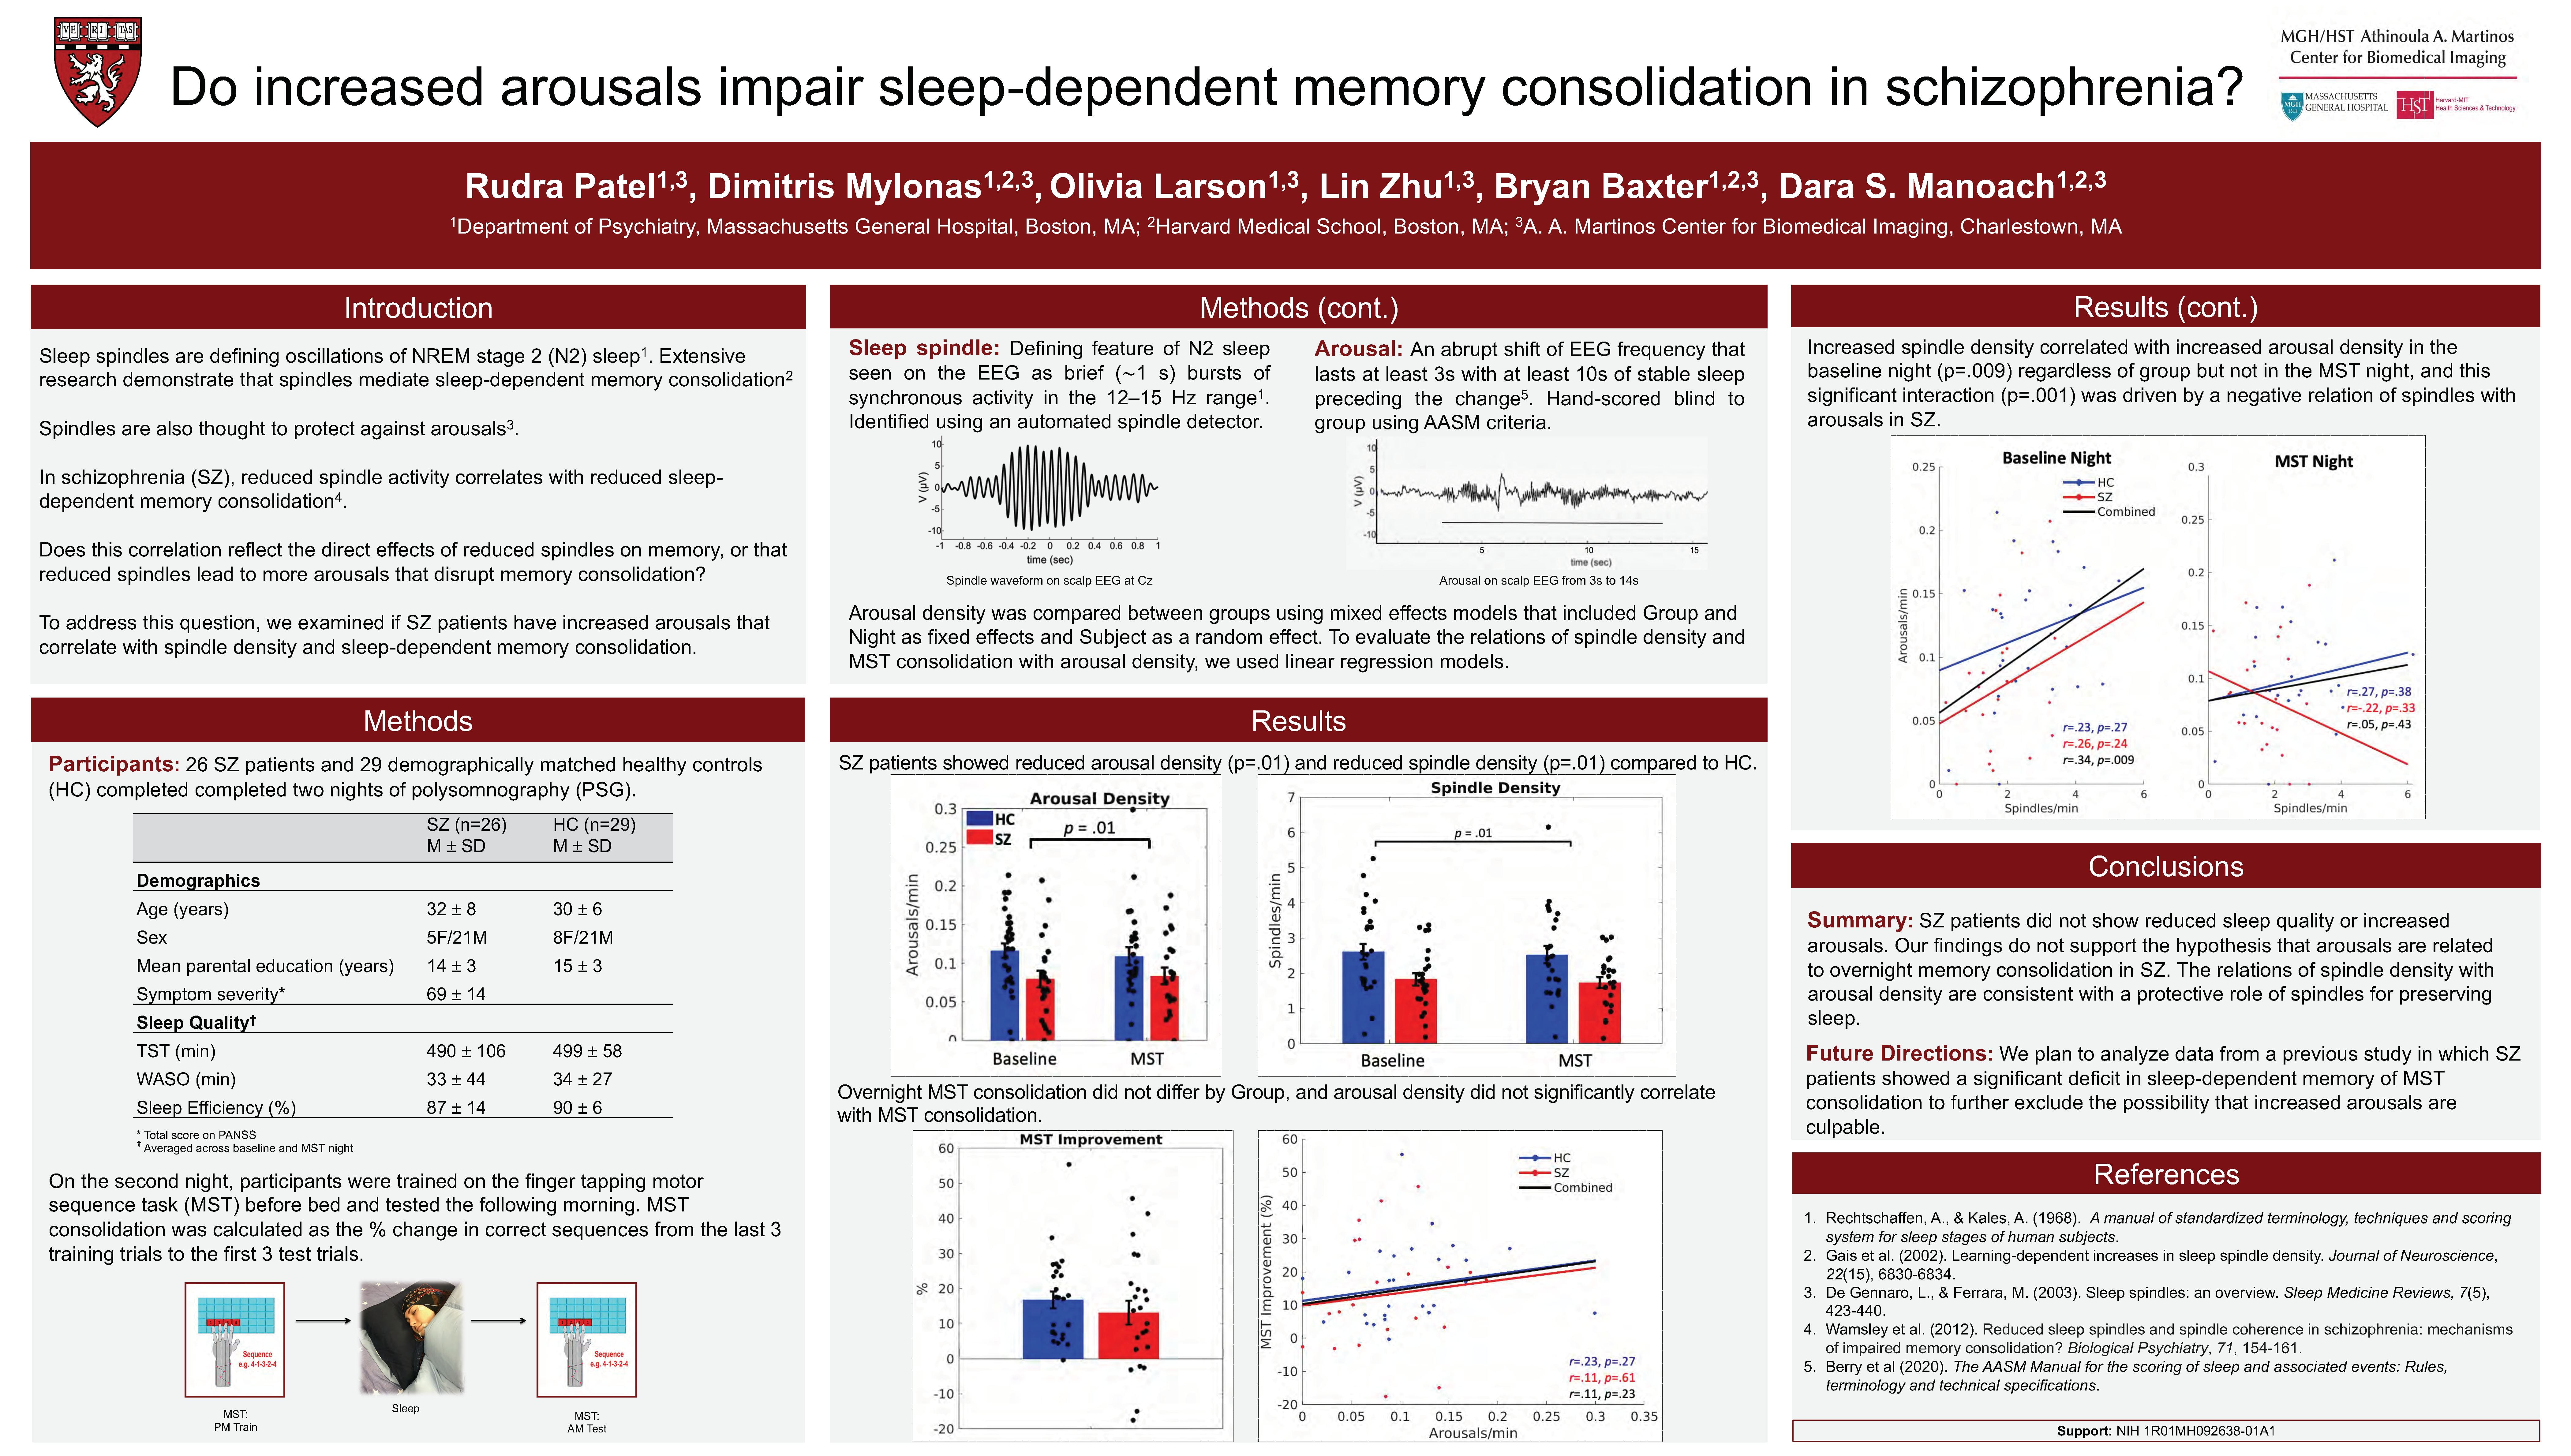 Does sleep fragmentation affect sleep-dependent memory consolidation in schizophrenia?